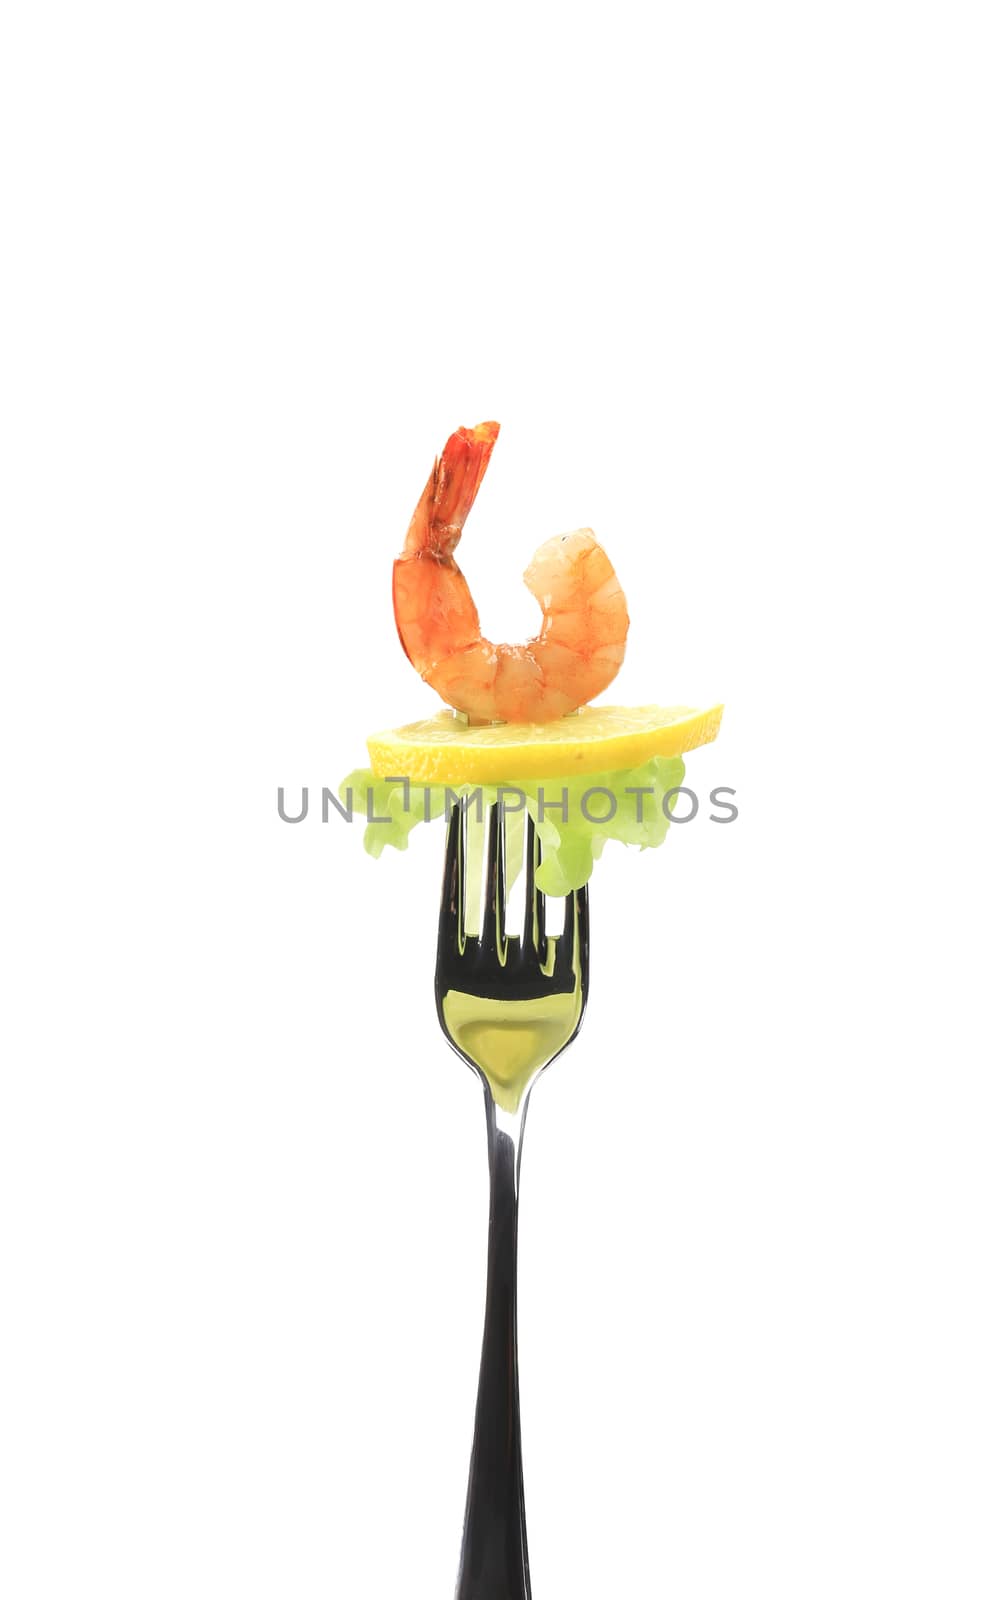 Shrimp on fork. Isolated on a white background.